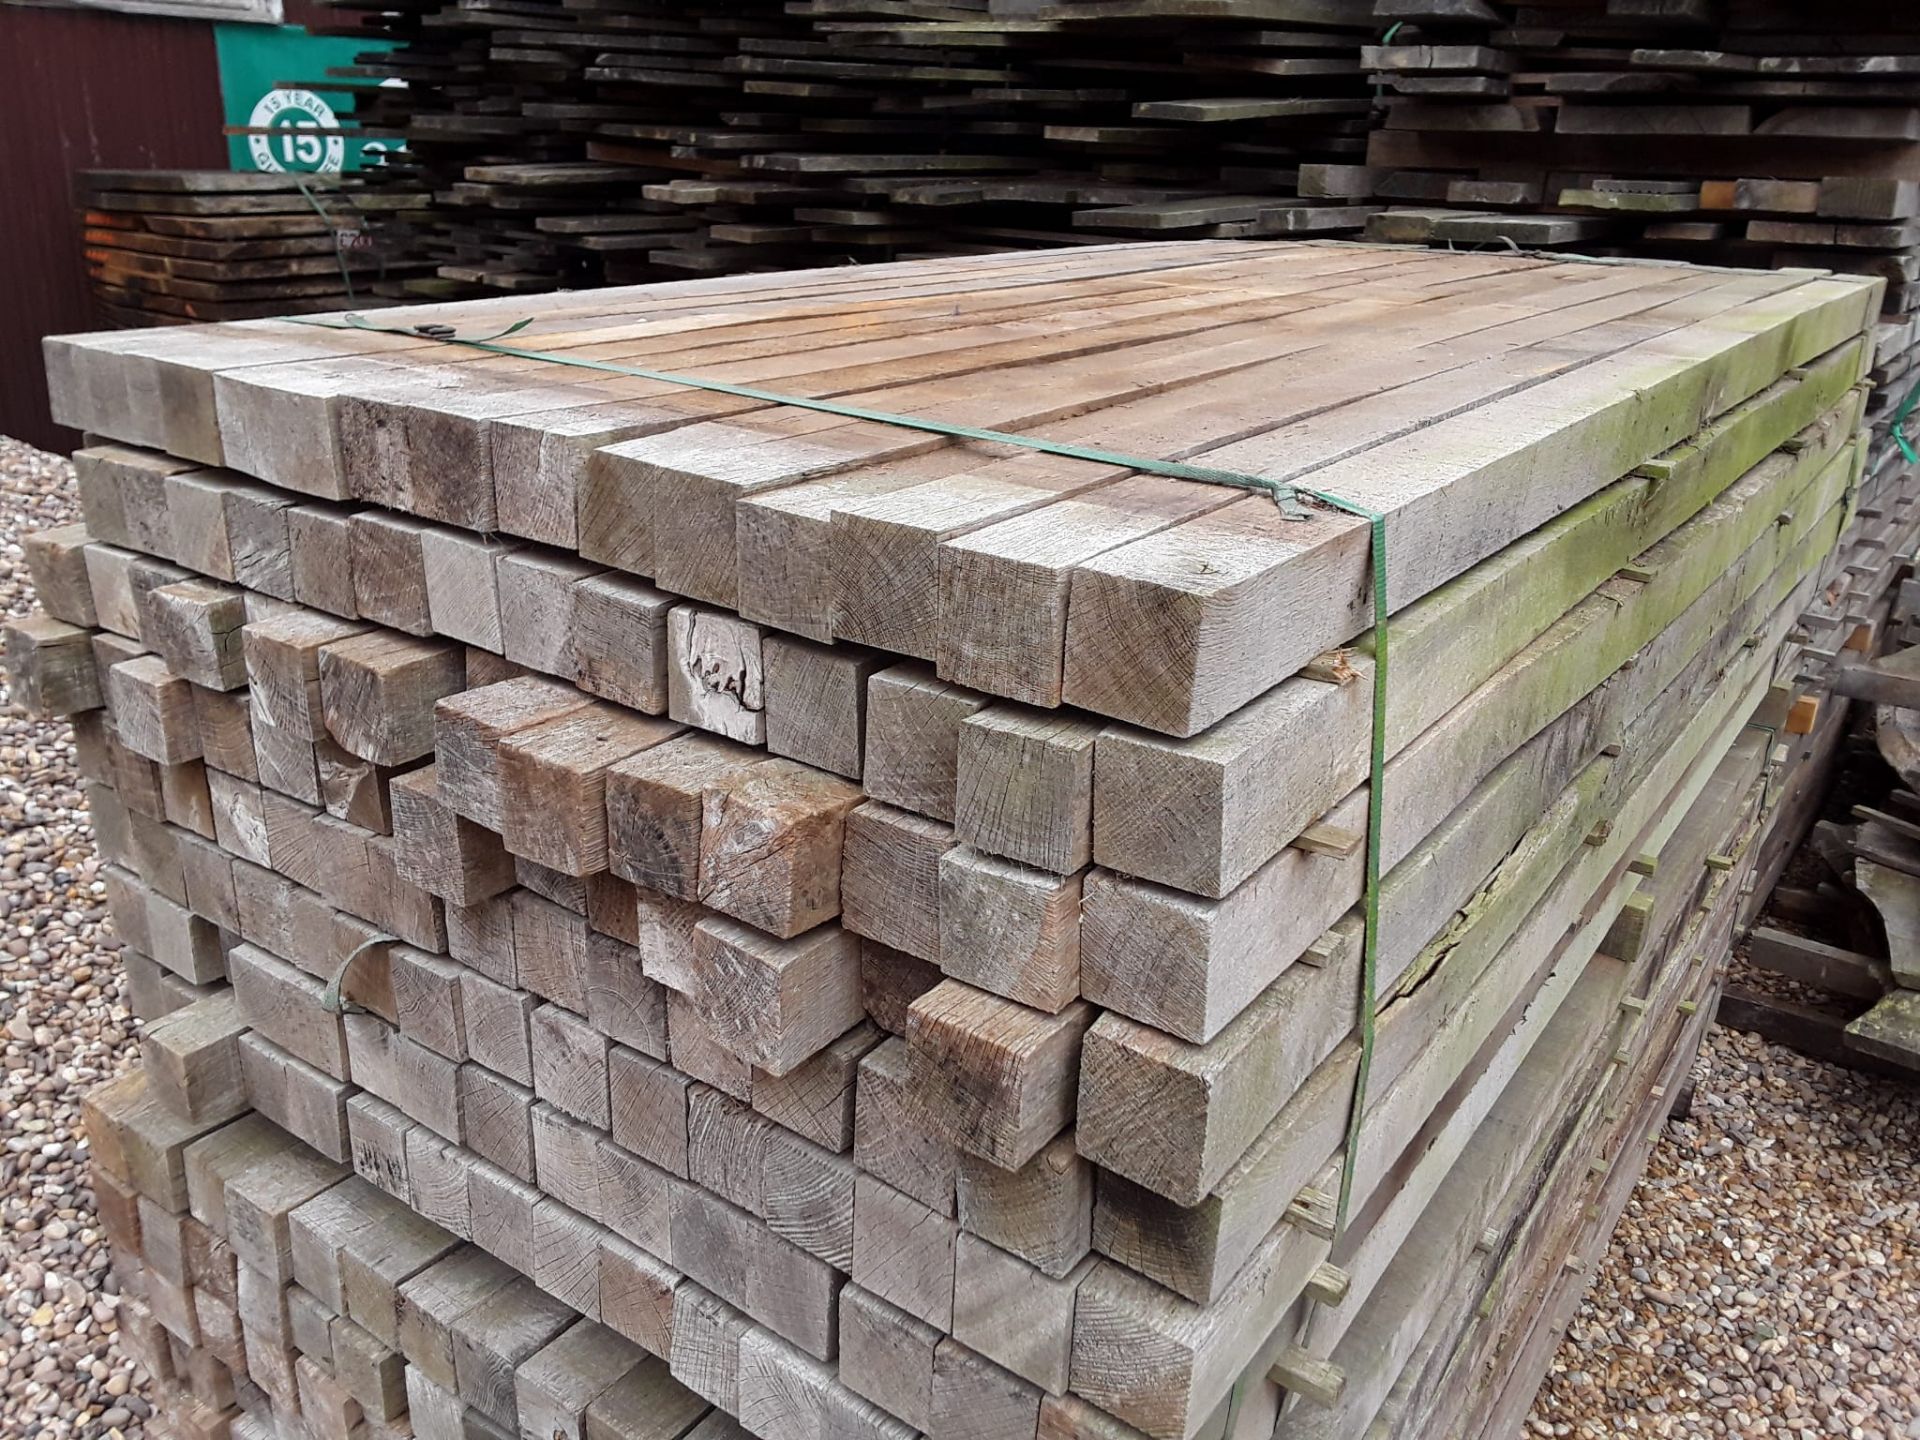 100x hardwood air dried timber sawn rustic English oak posts